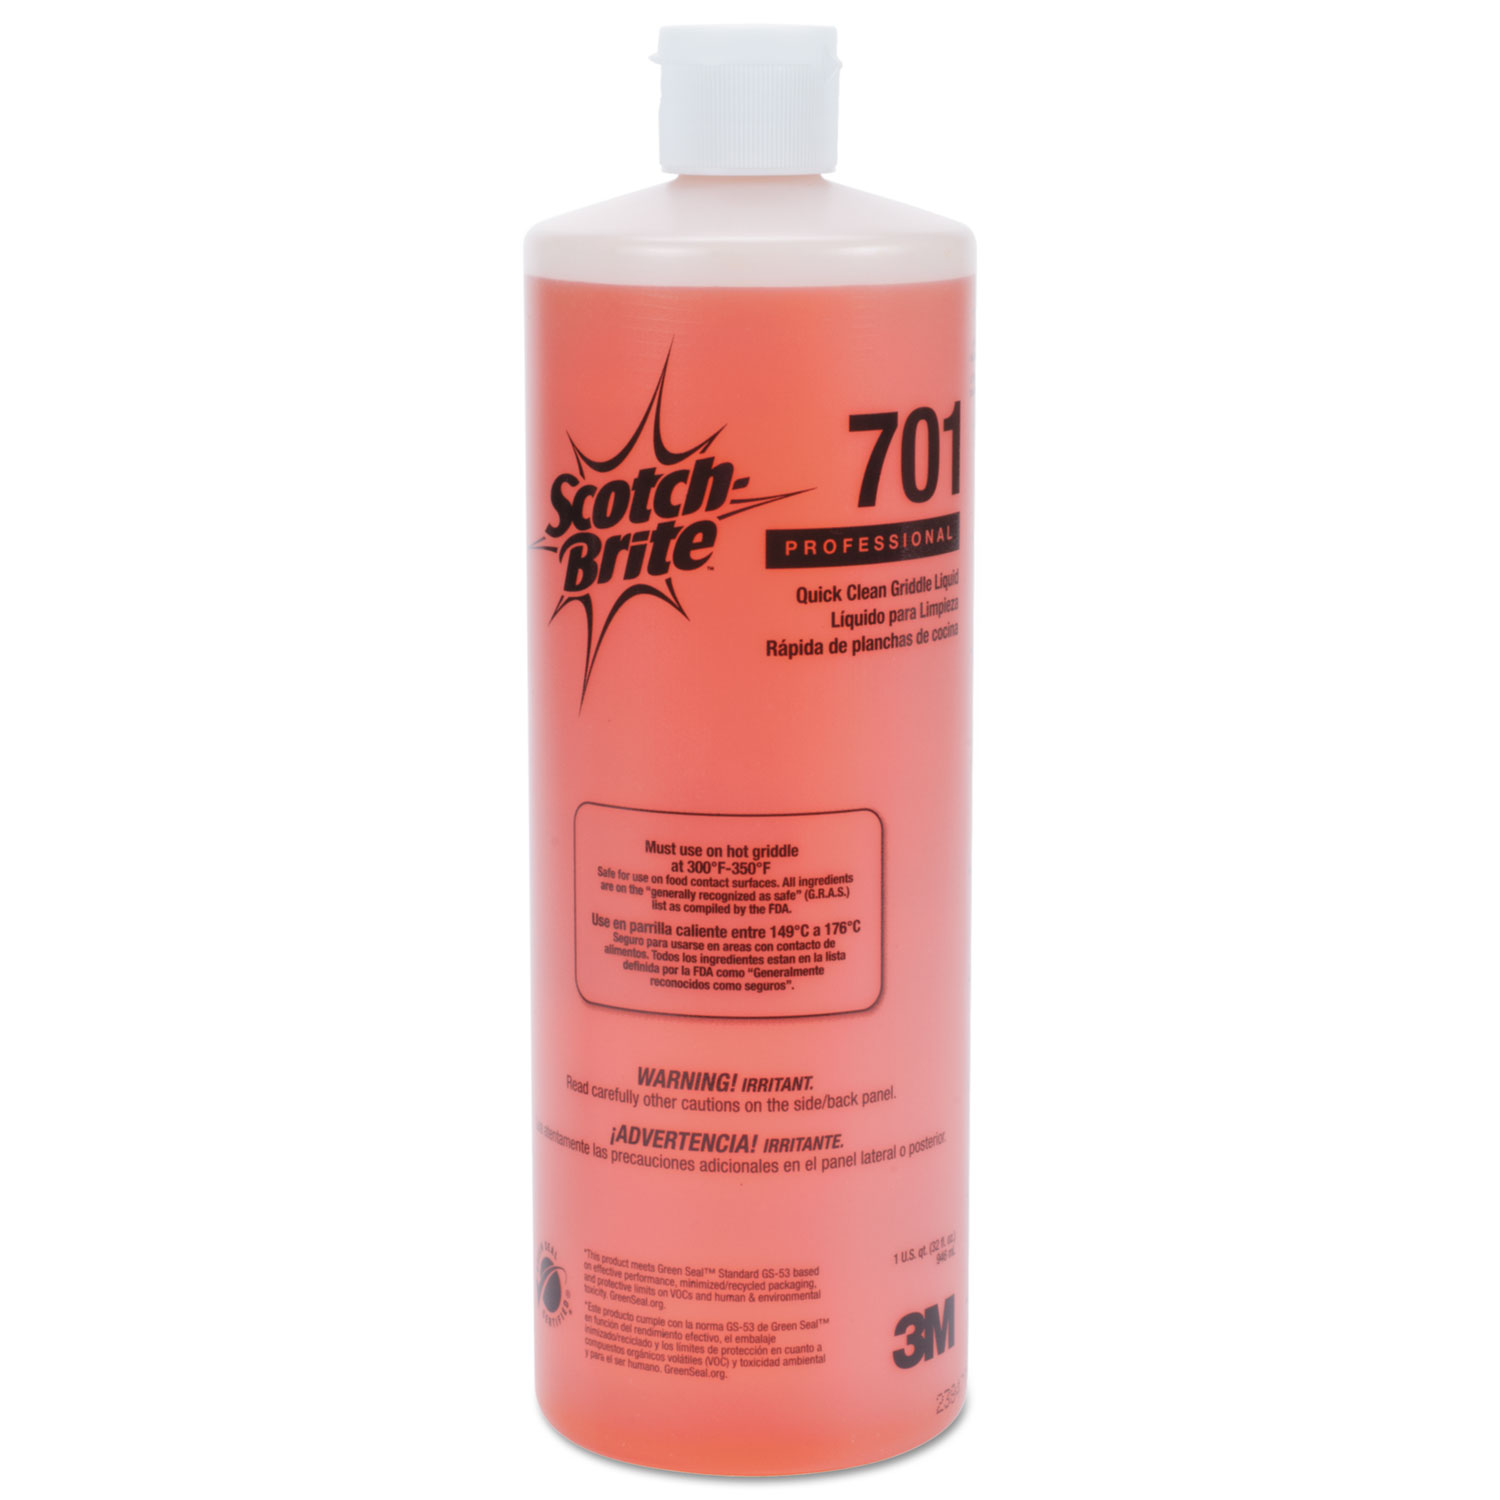  Scotch-Brite PROFESSIONAL 701 Quick Clean Griddle Liquid, 1 qt Bottle (MMM26012) 